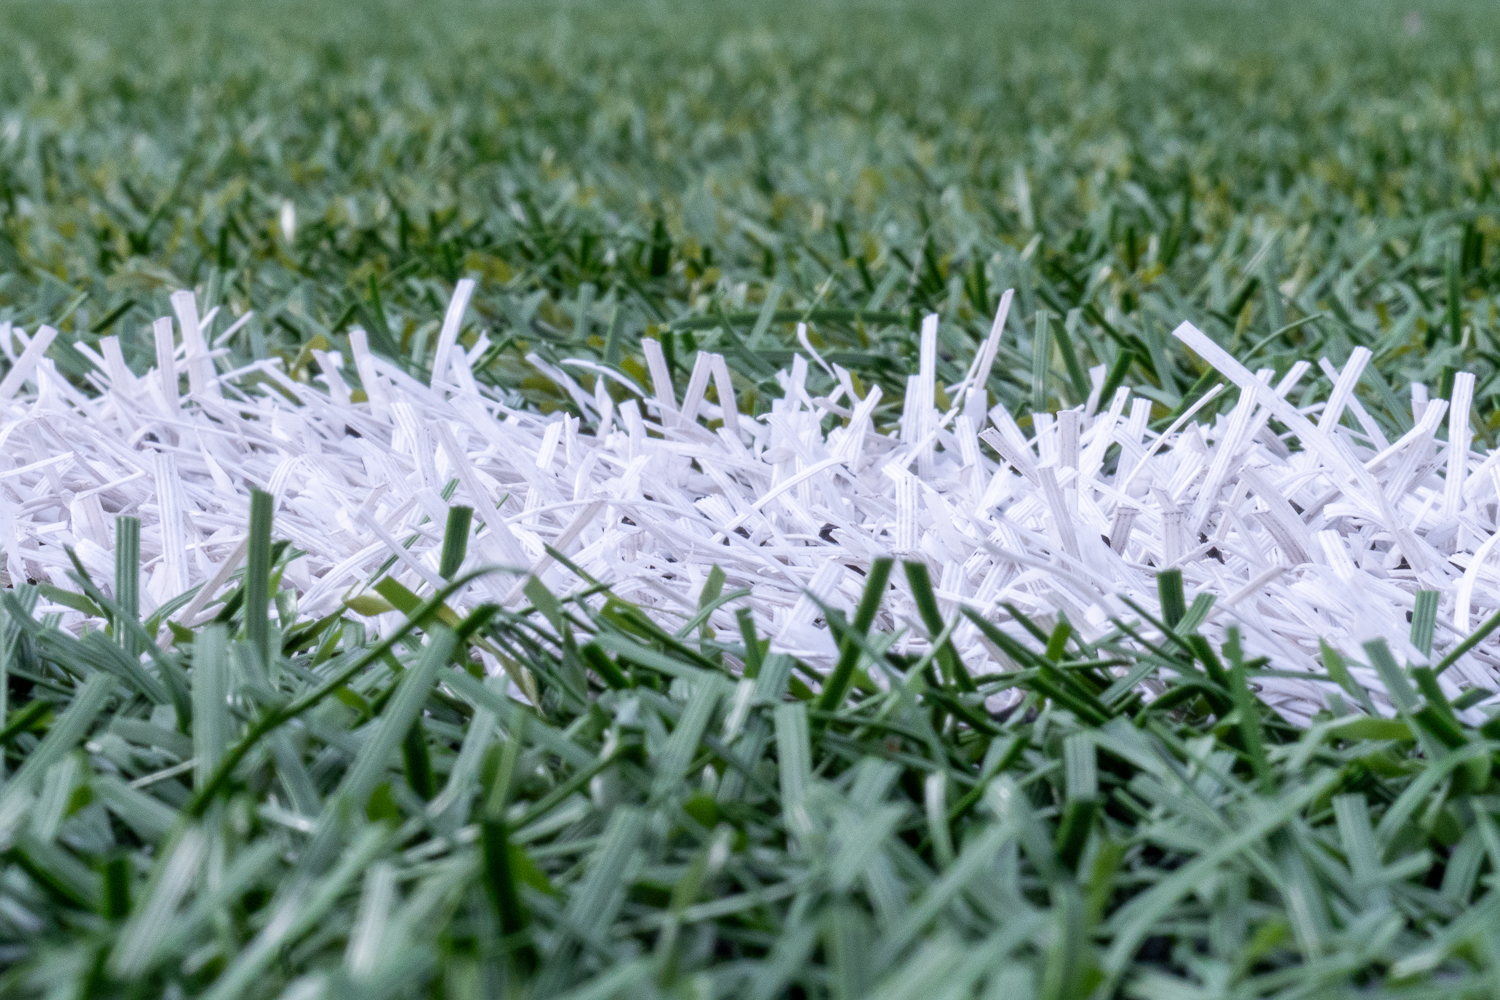 Artificial turf at Newman Stadium